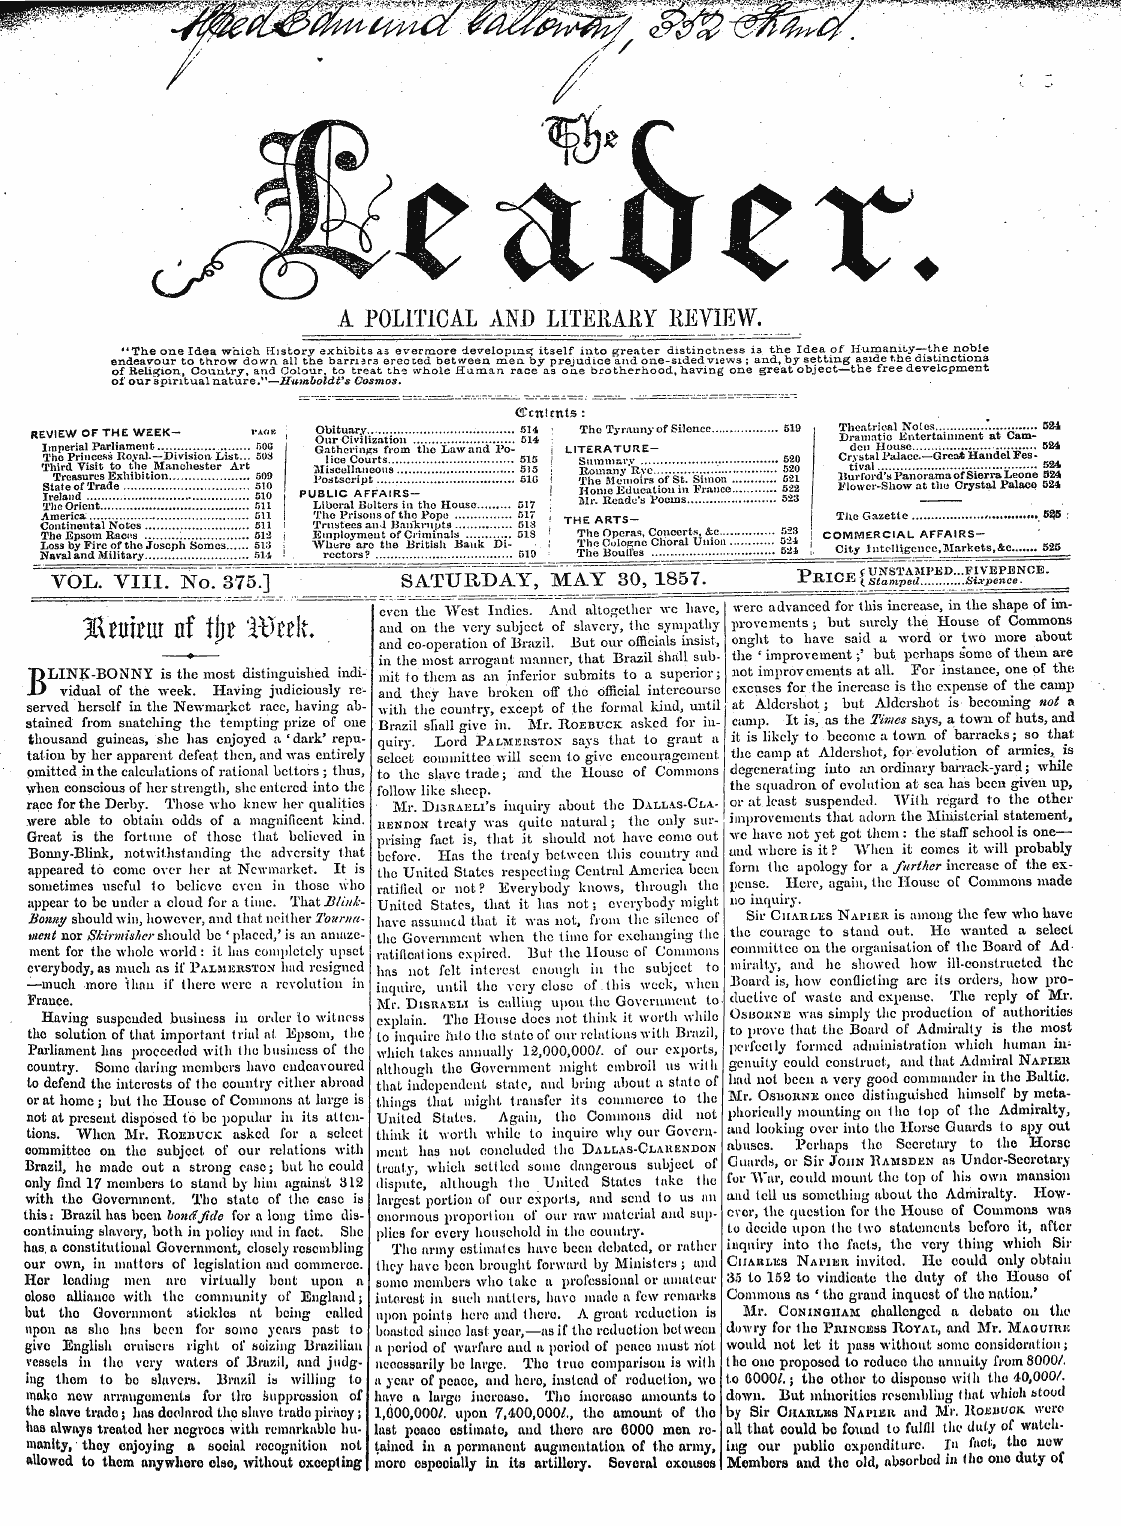 Leader (1850-1860): jS F Y, 2nd edition - " Vcxl. Viii. No/375.1 " Saturday; " May...